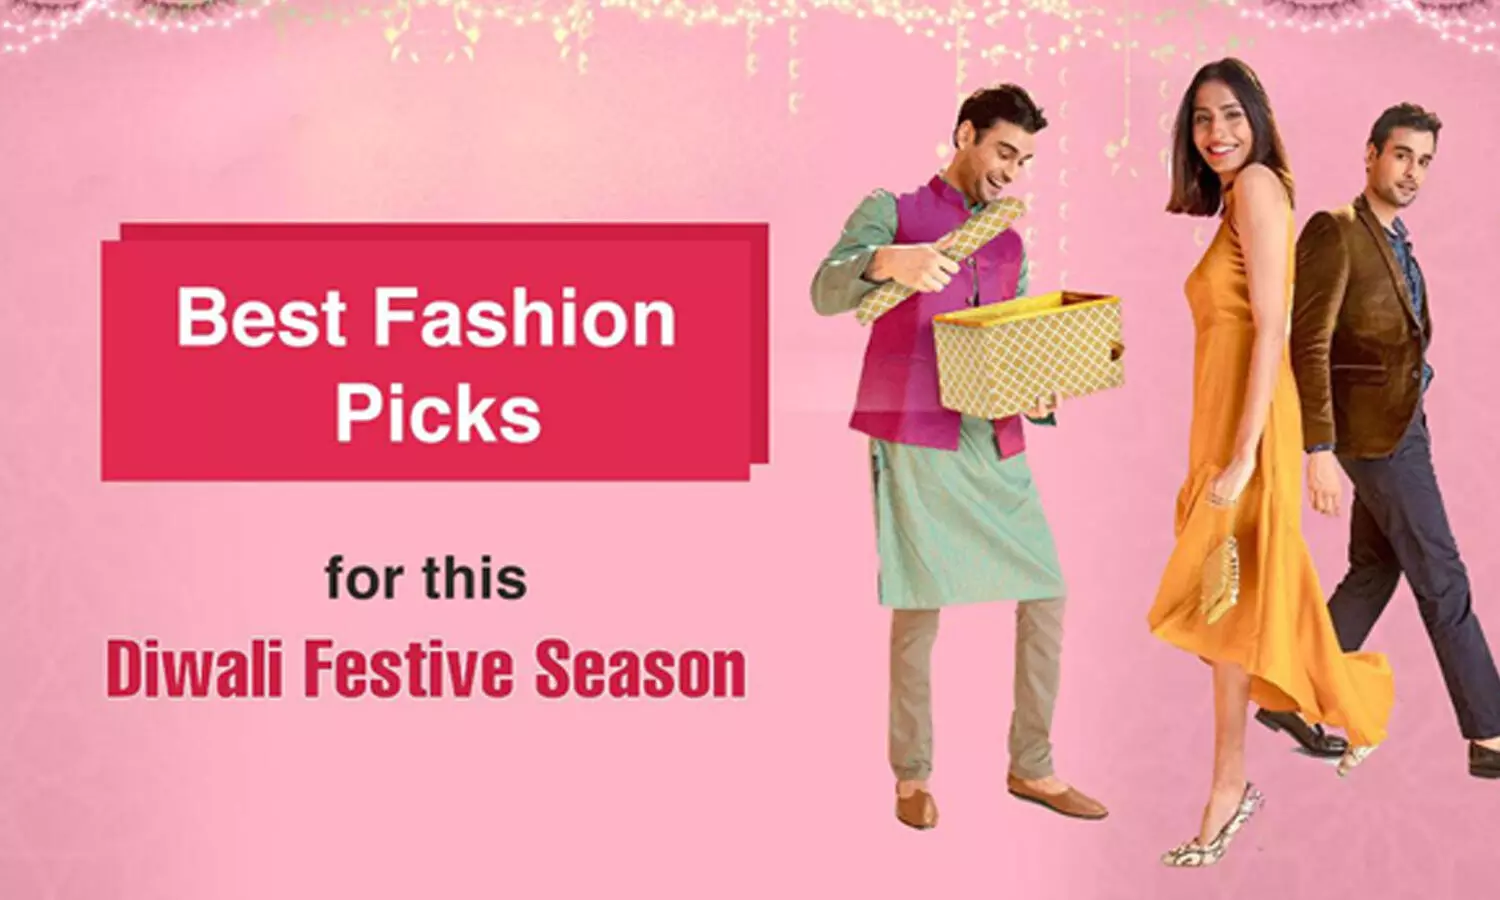 Best Fashion Picks for this Diwali Festive Season